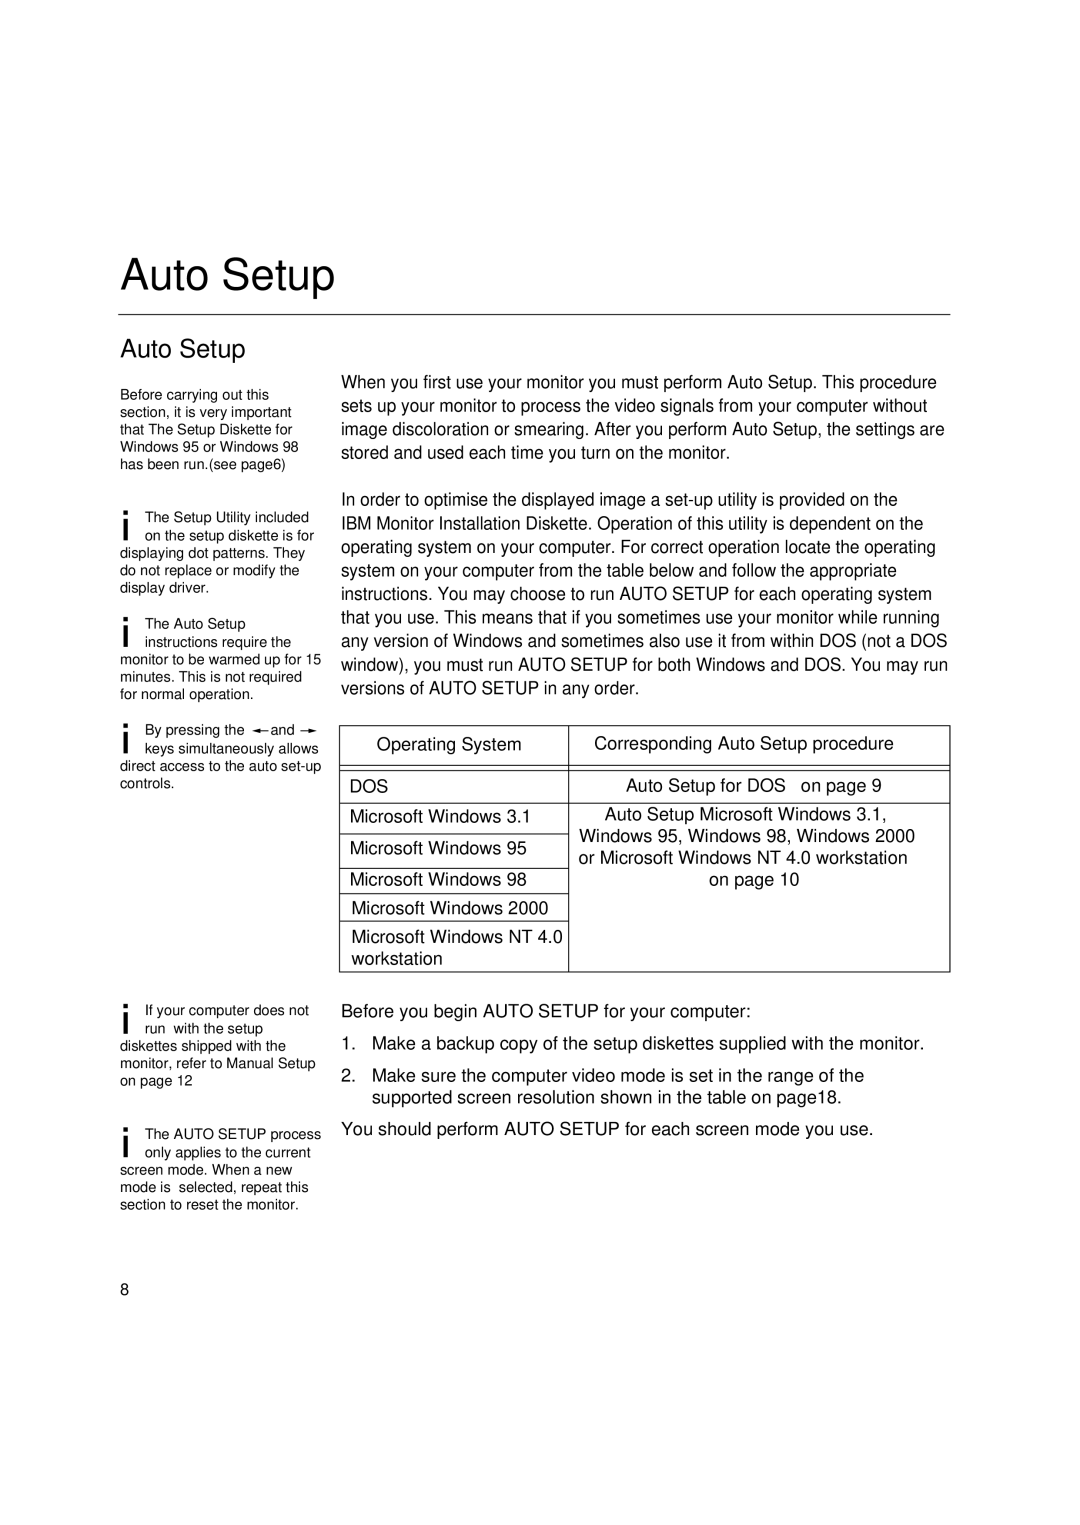 Lenovo T545 manual Operating System Corresponding Auto Setup procedure, Microsoft Windows 